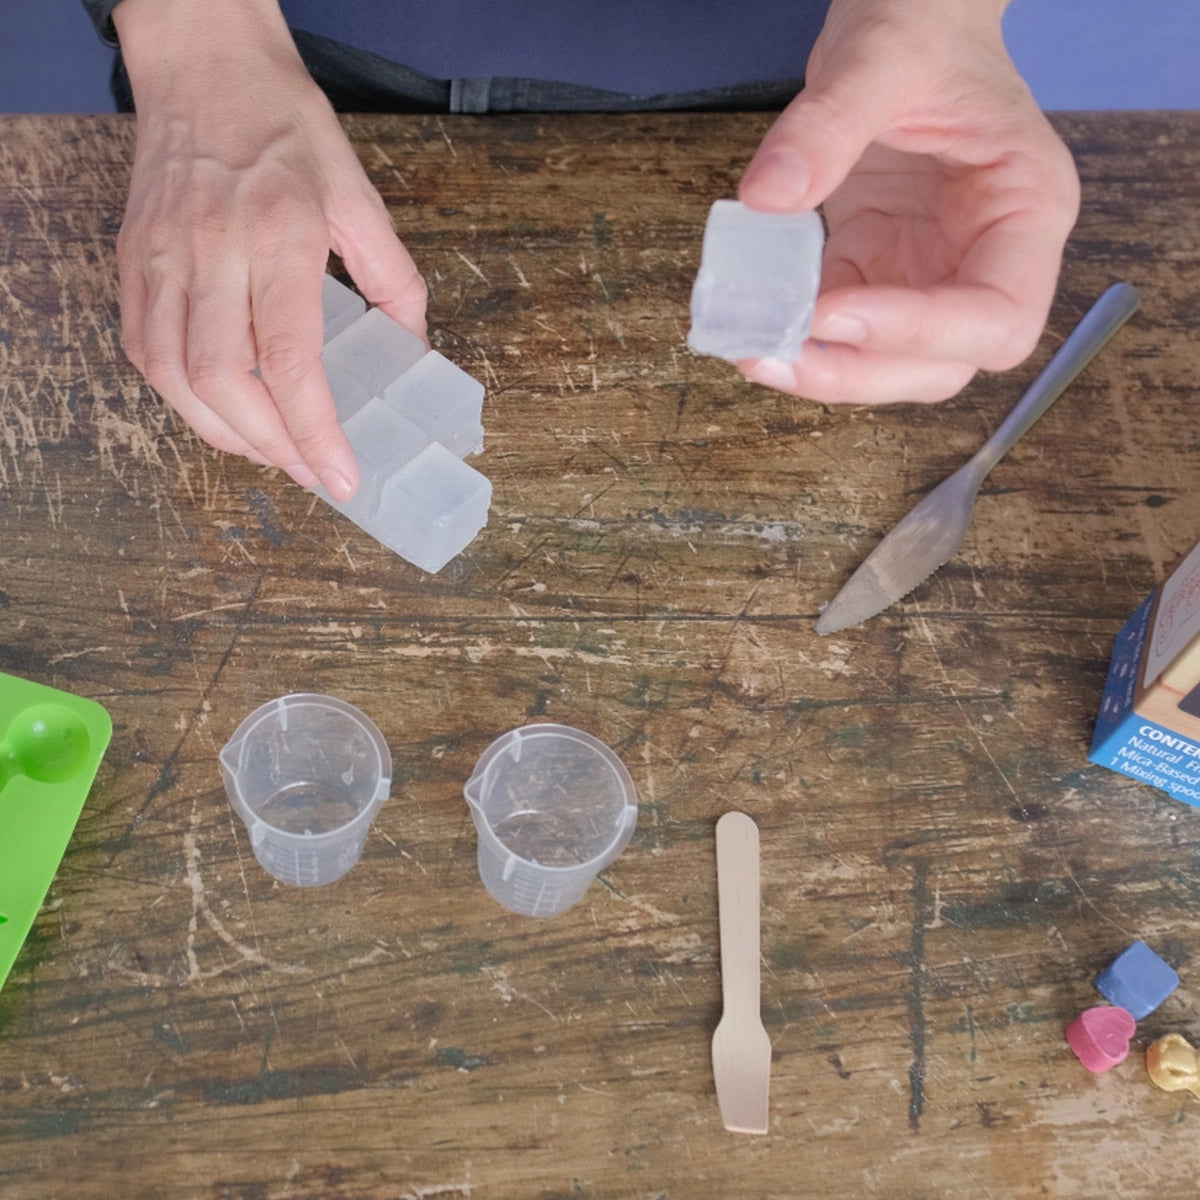 DIY Kits for Kids - Soap Queen